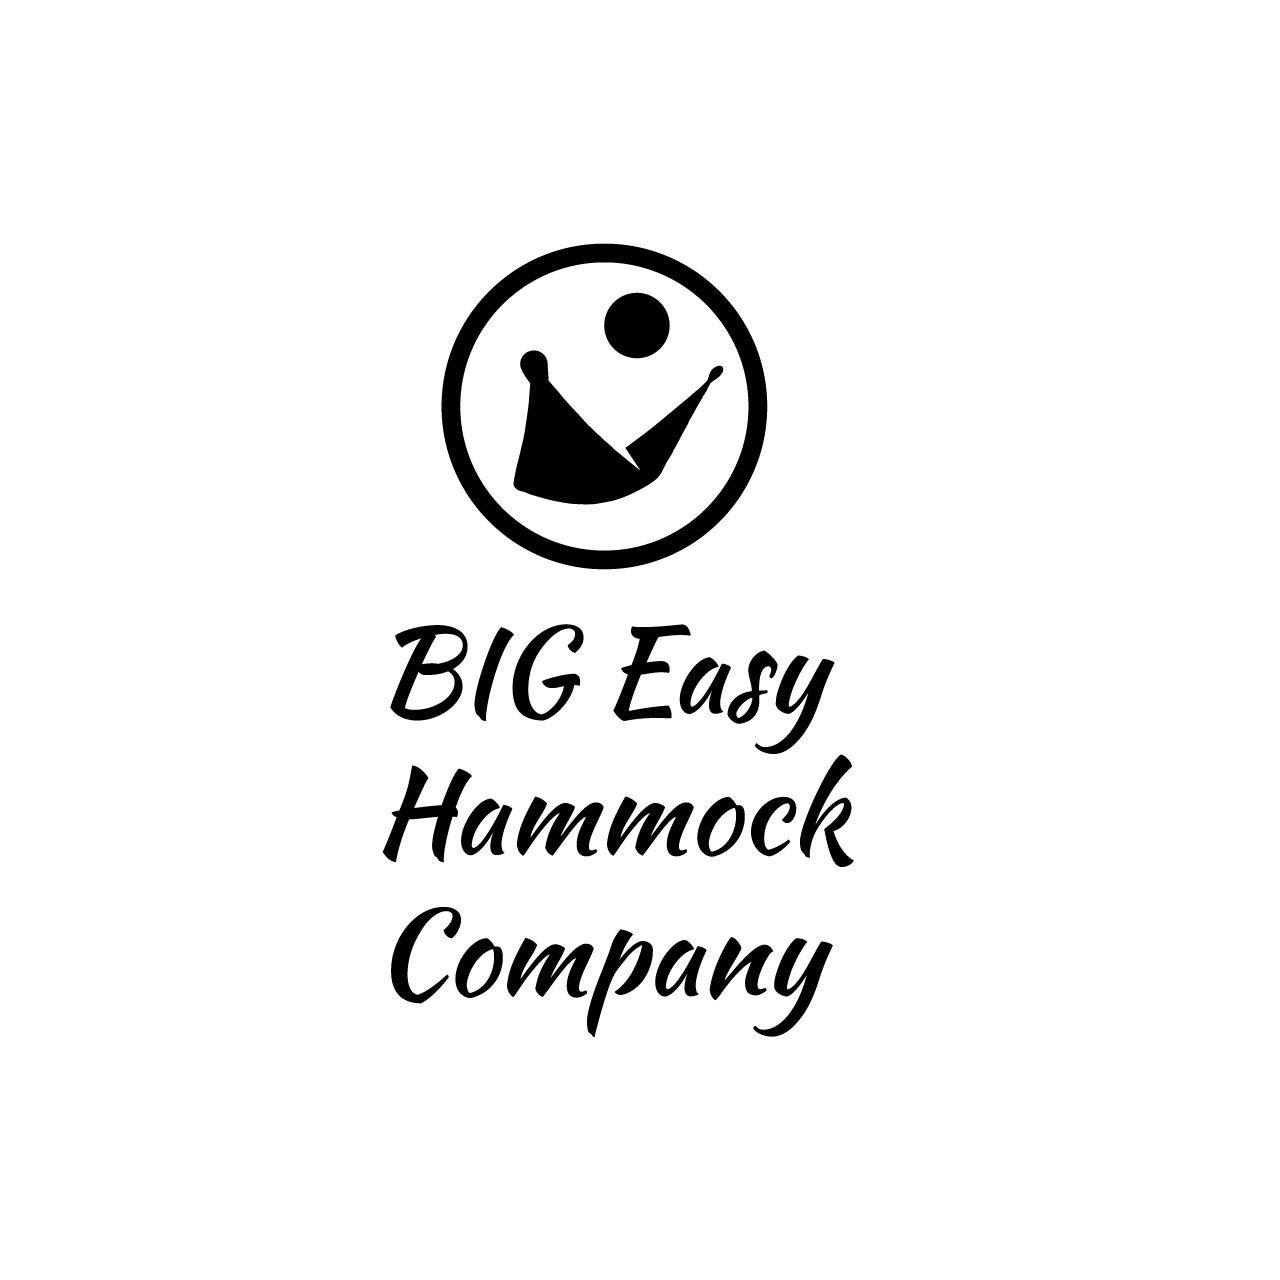 Easy Company Logo - Playful, Personable, It Company Logo Design for Big Easy Hammock